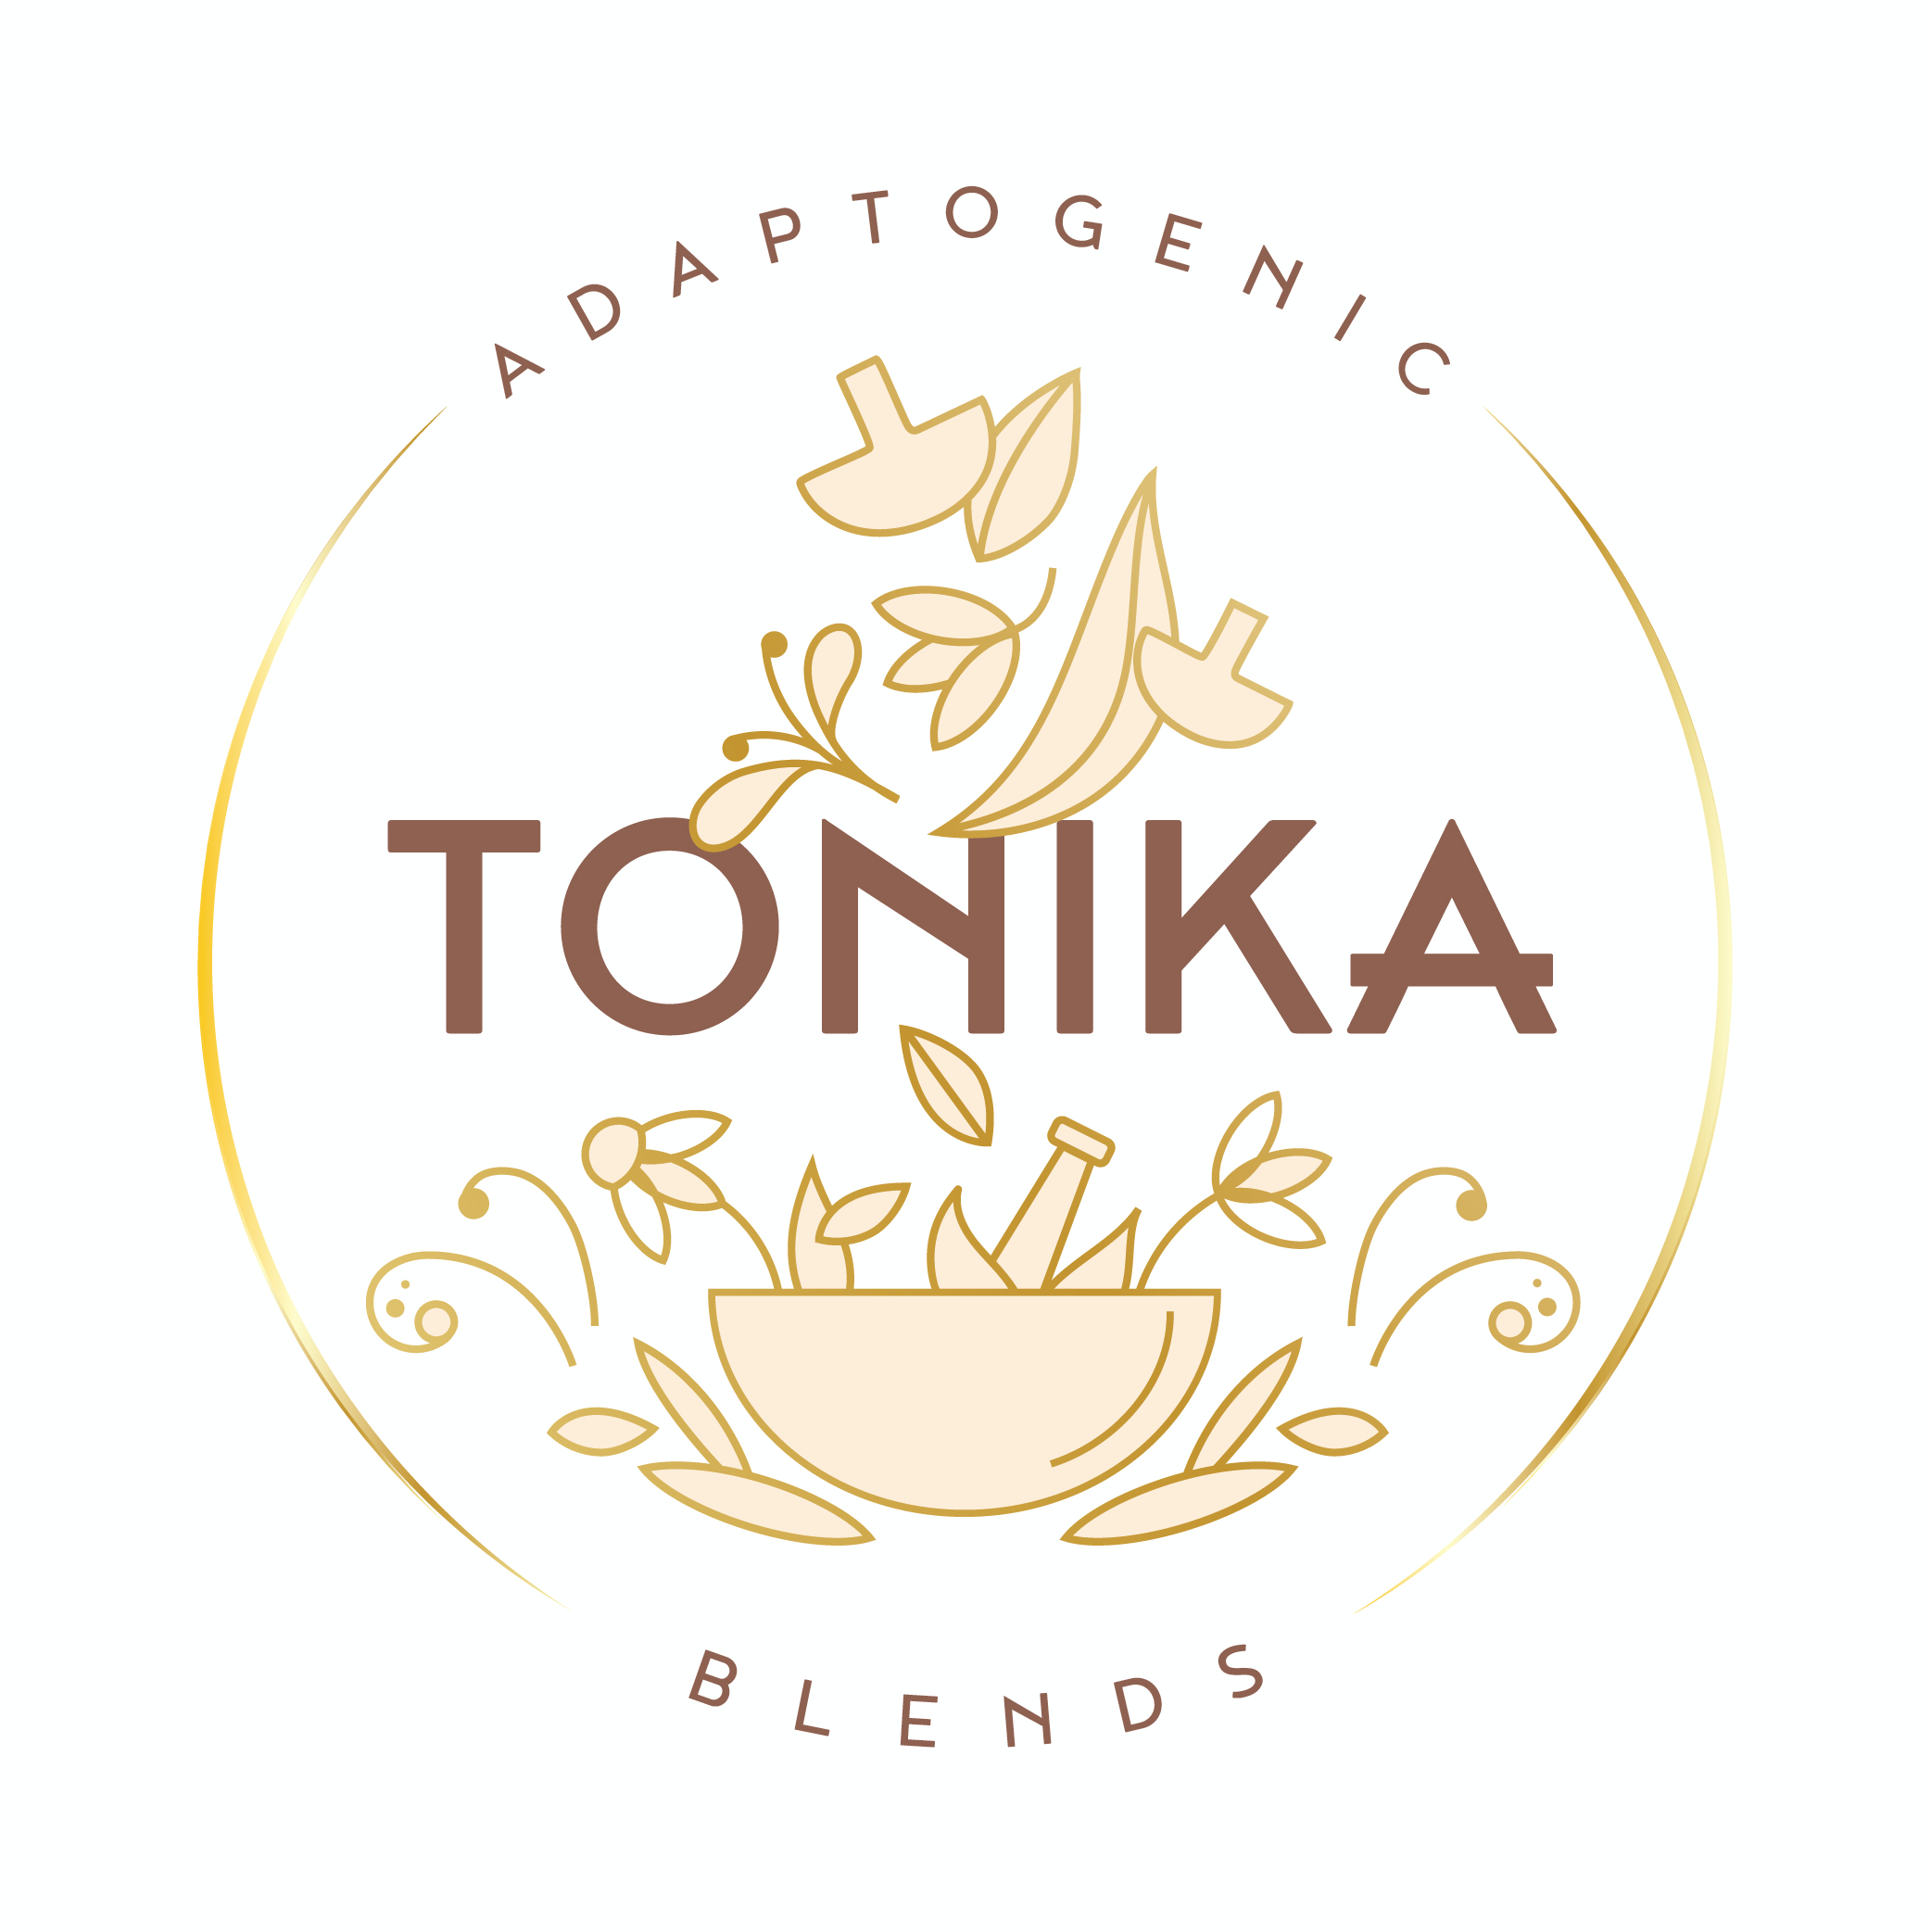 Tonika Collective